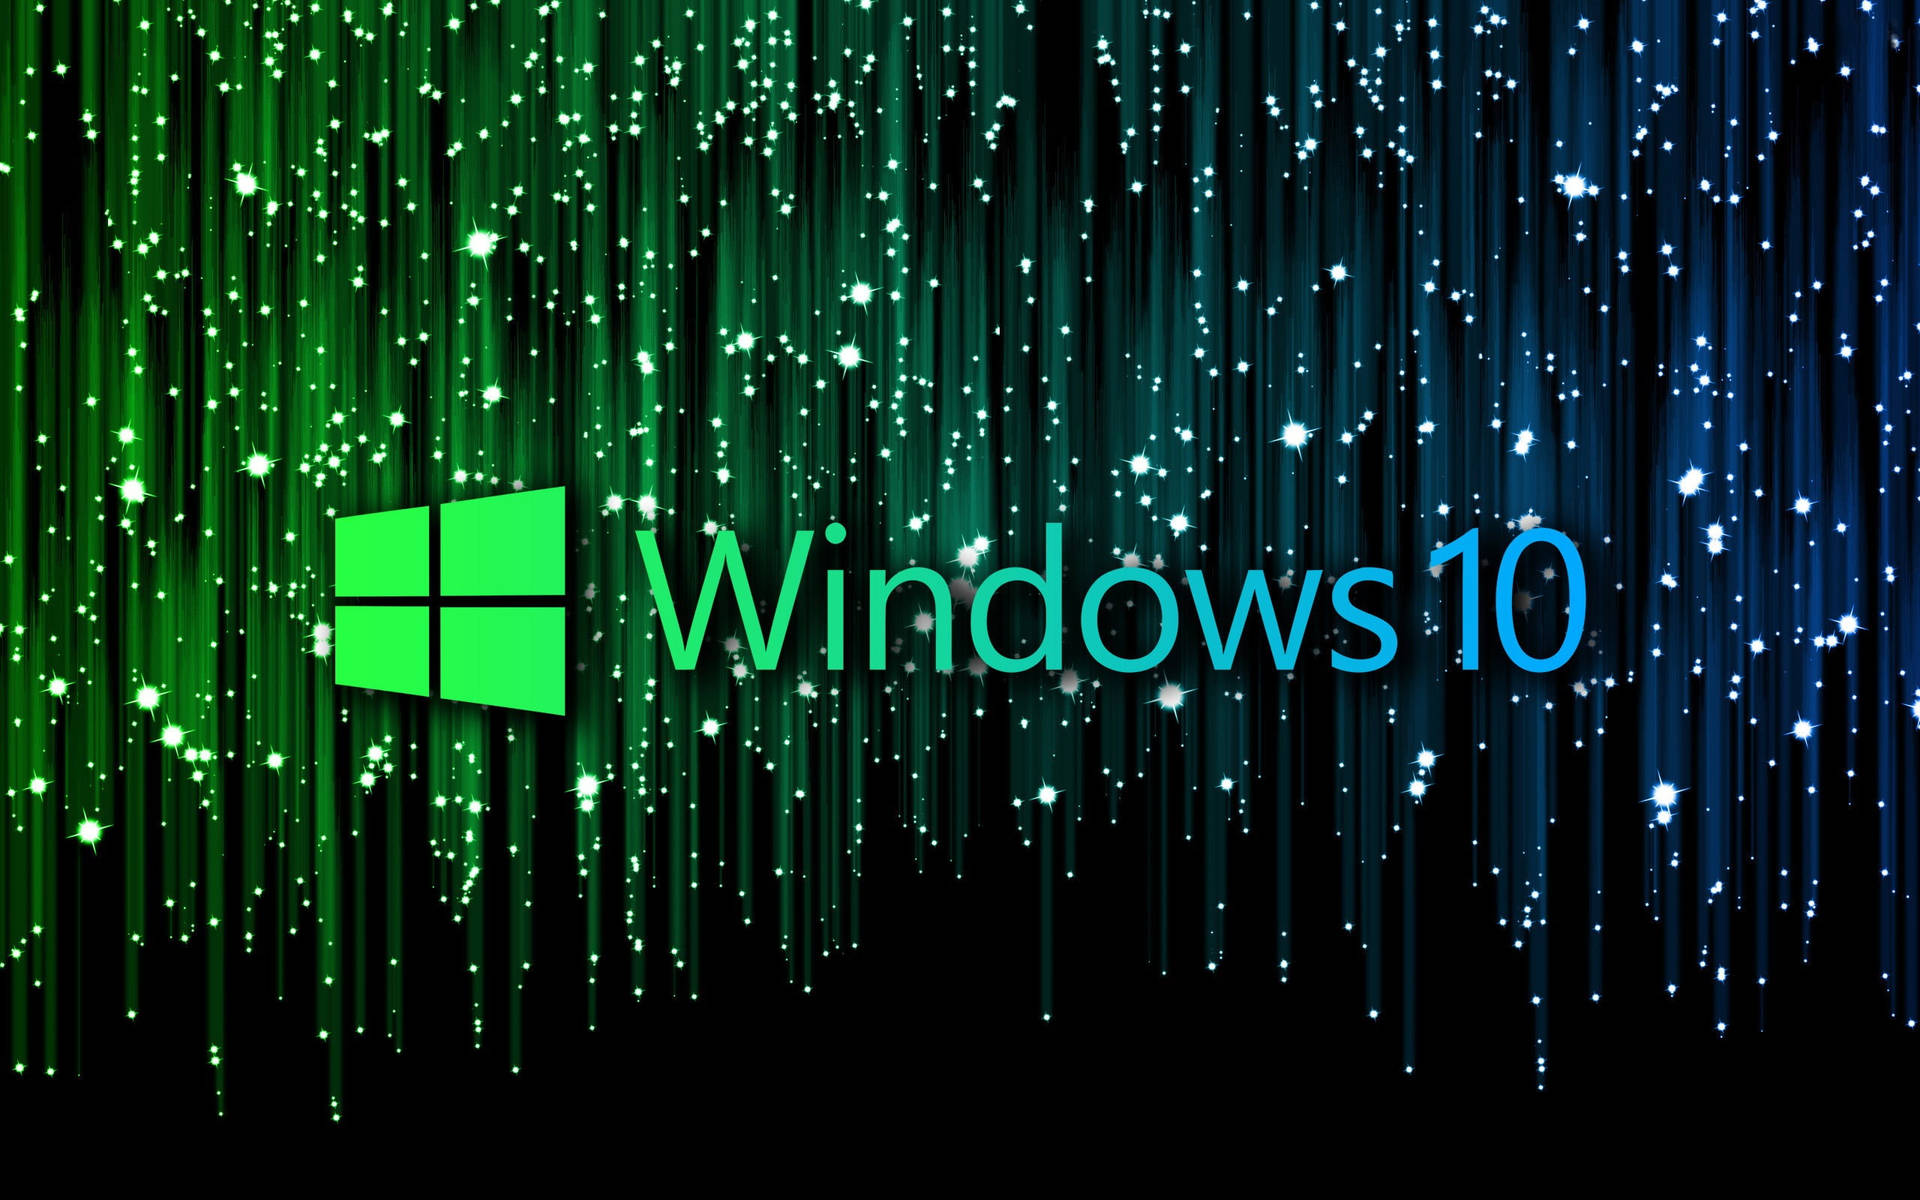 Sparkly Windows 10 Theme Background